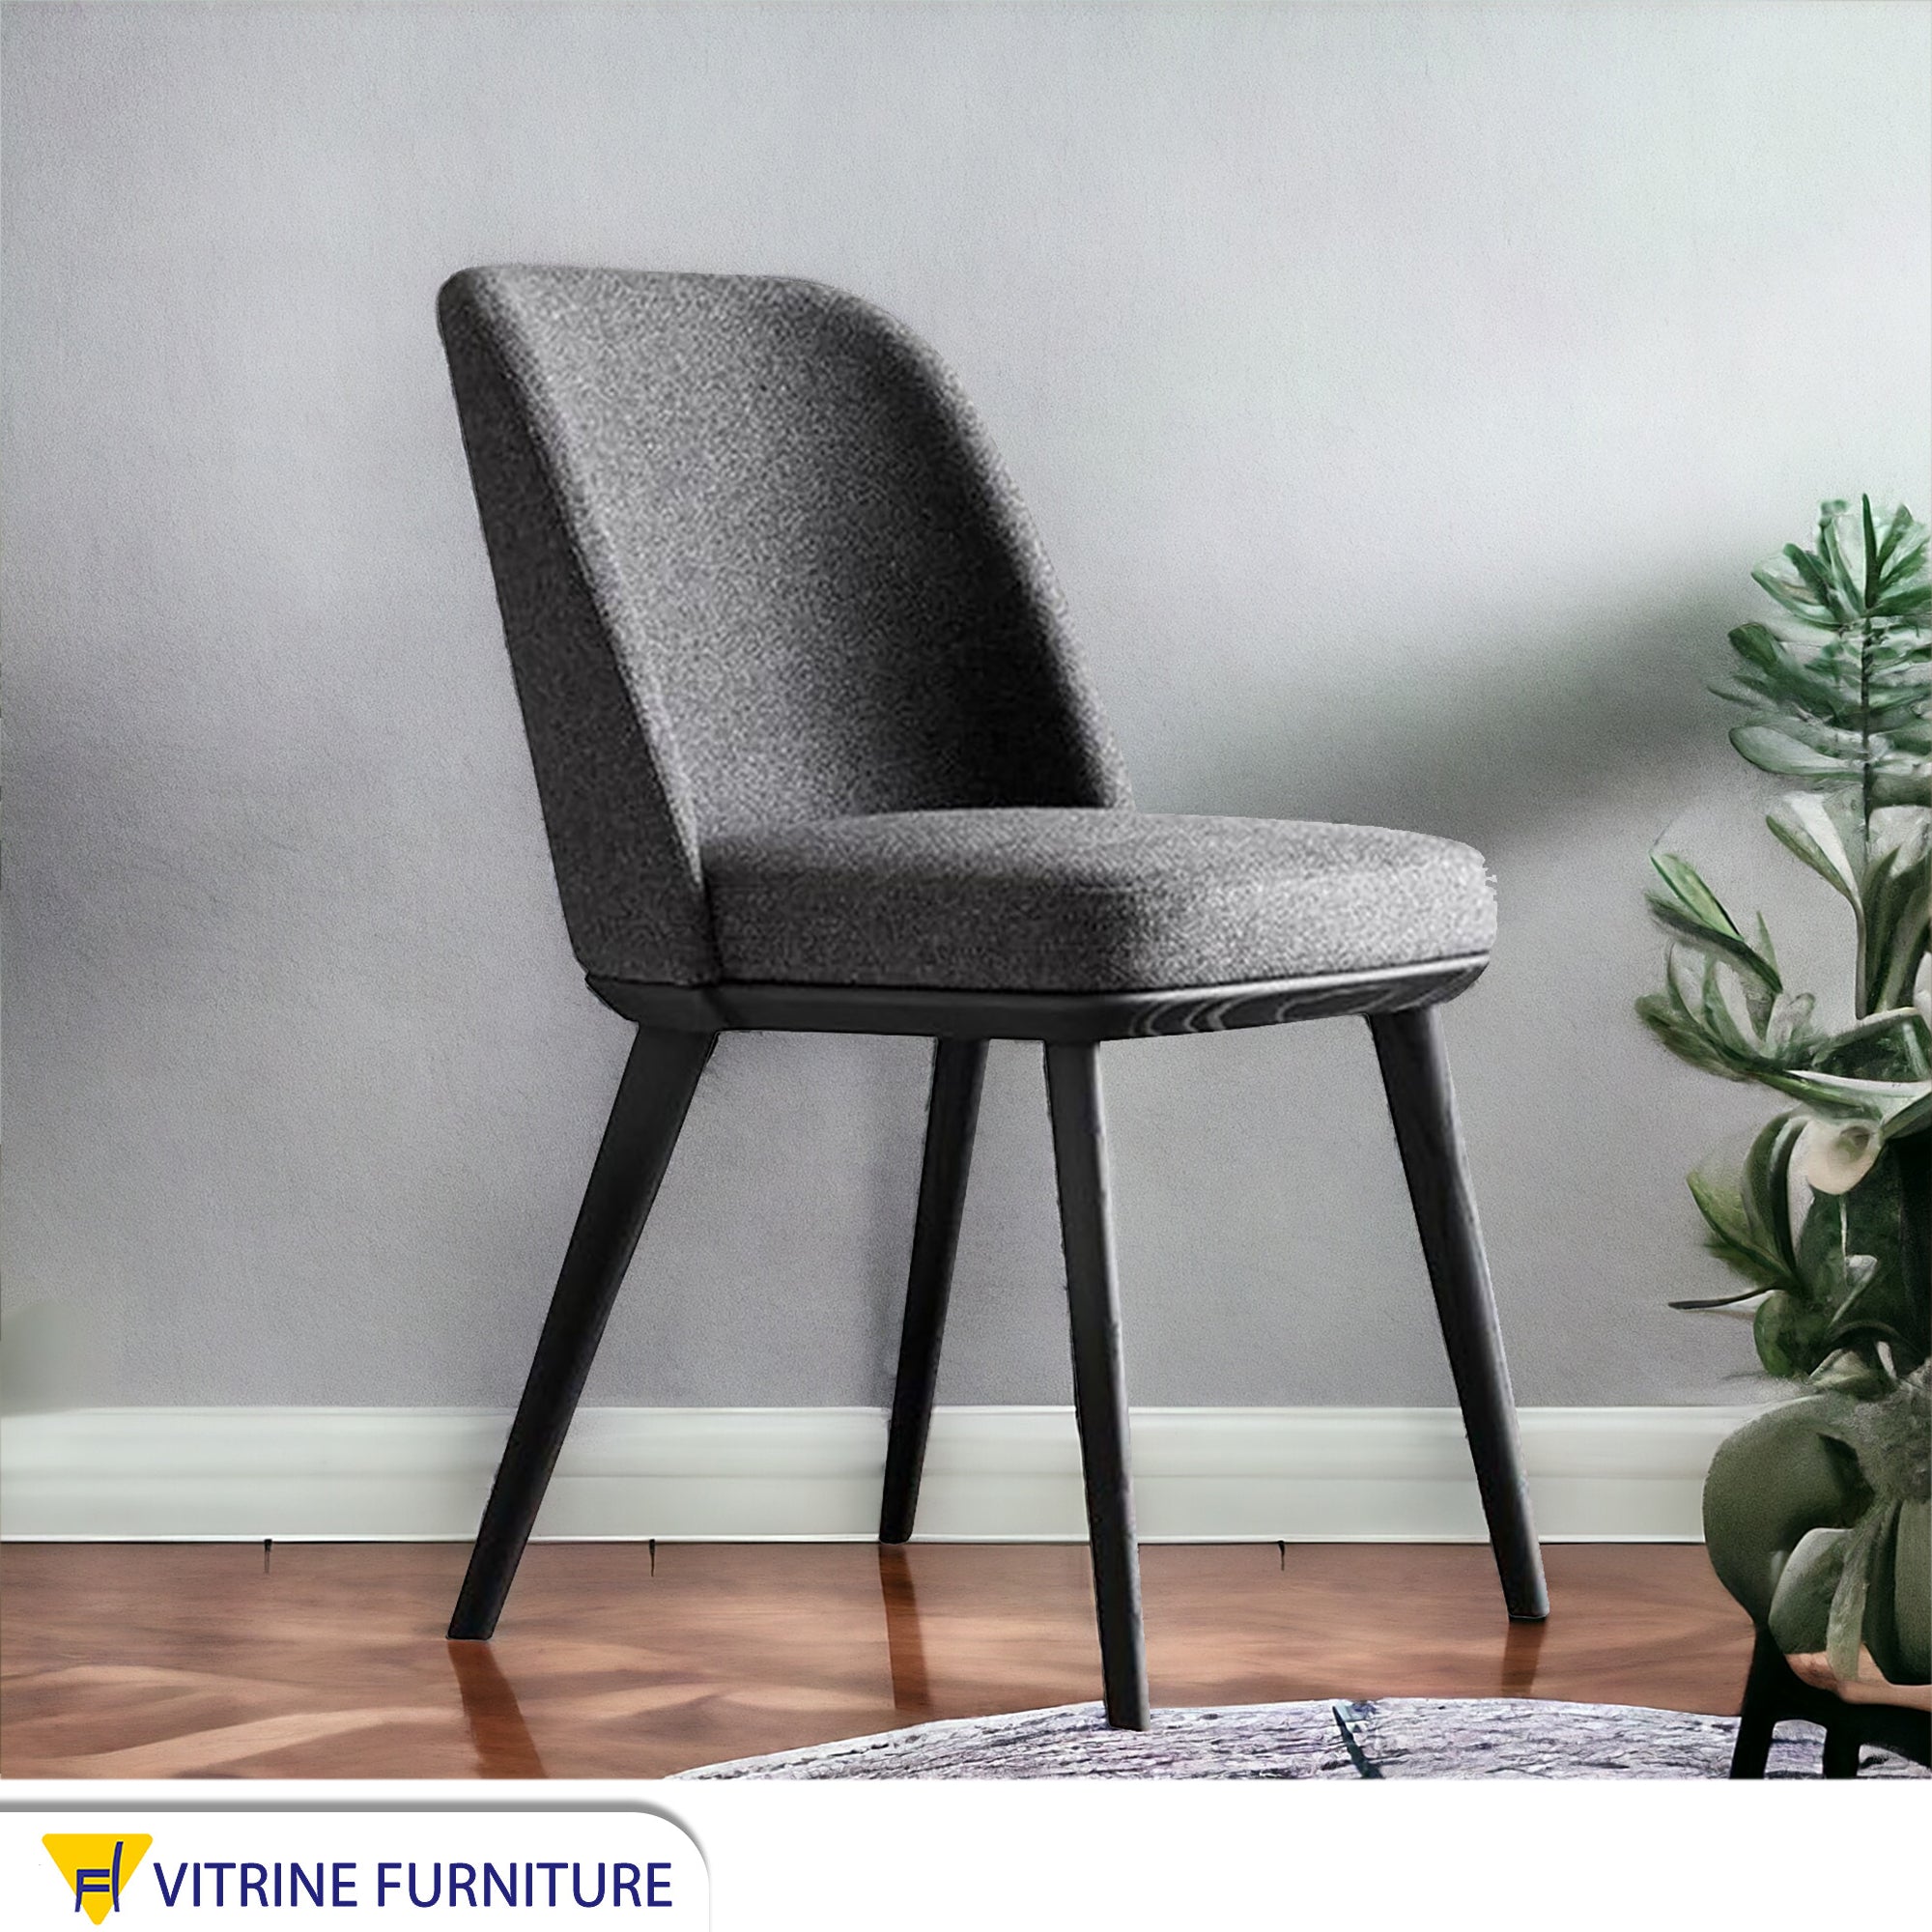 Dark grey upholstered chair